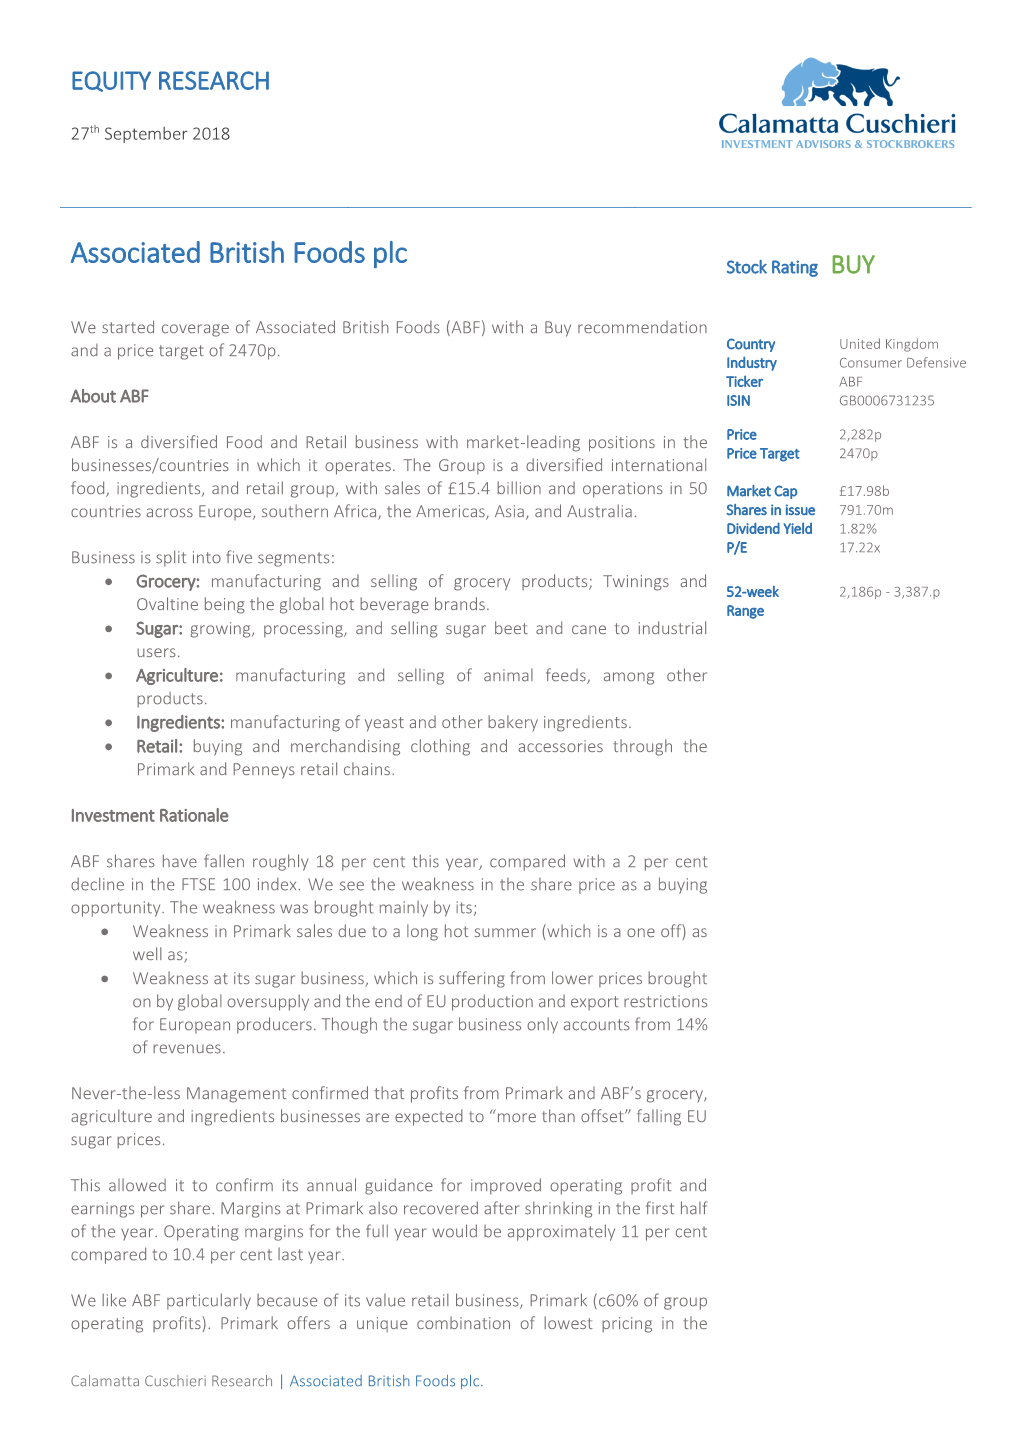 Associated British Foods Plc Stock Rating BUY